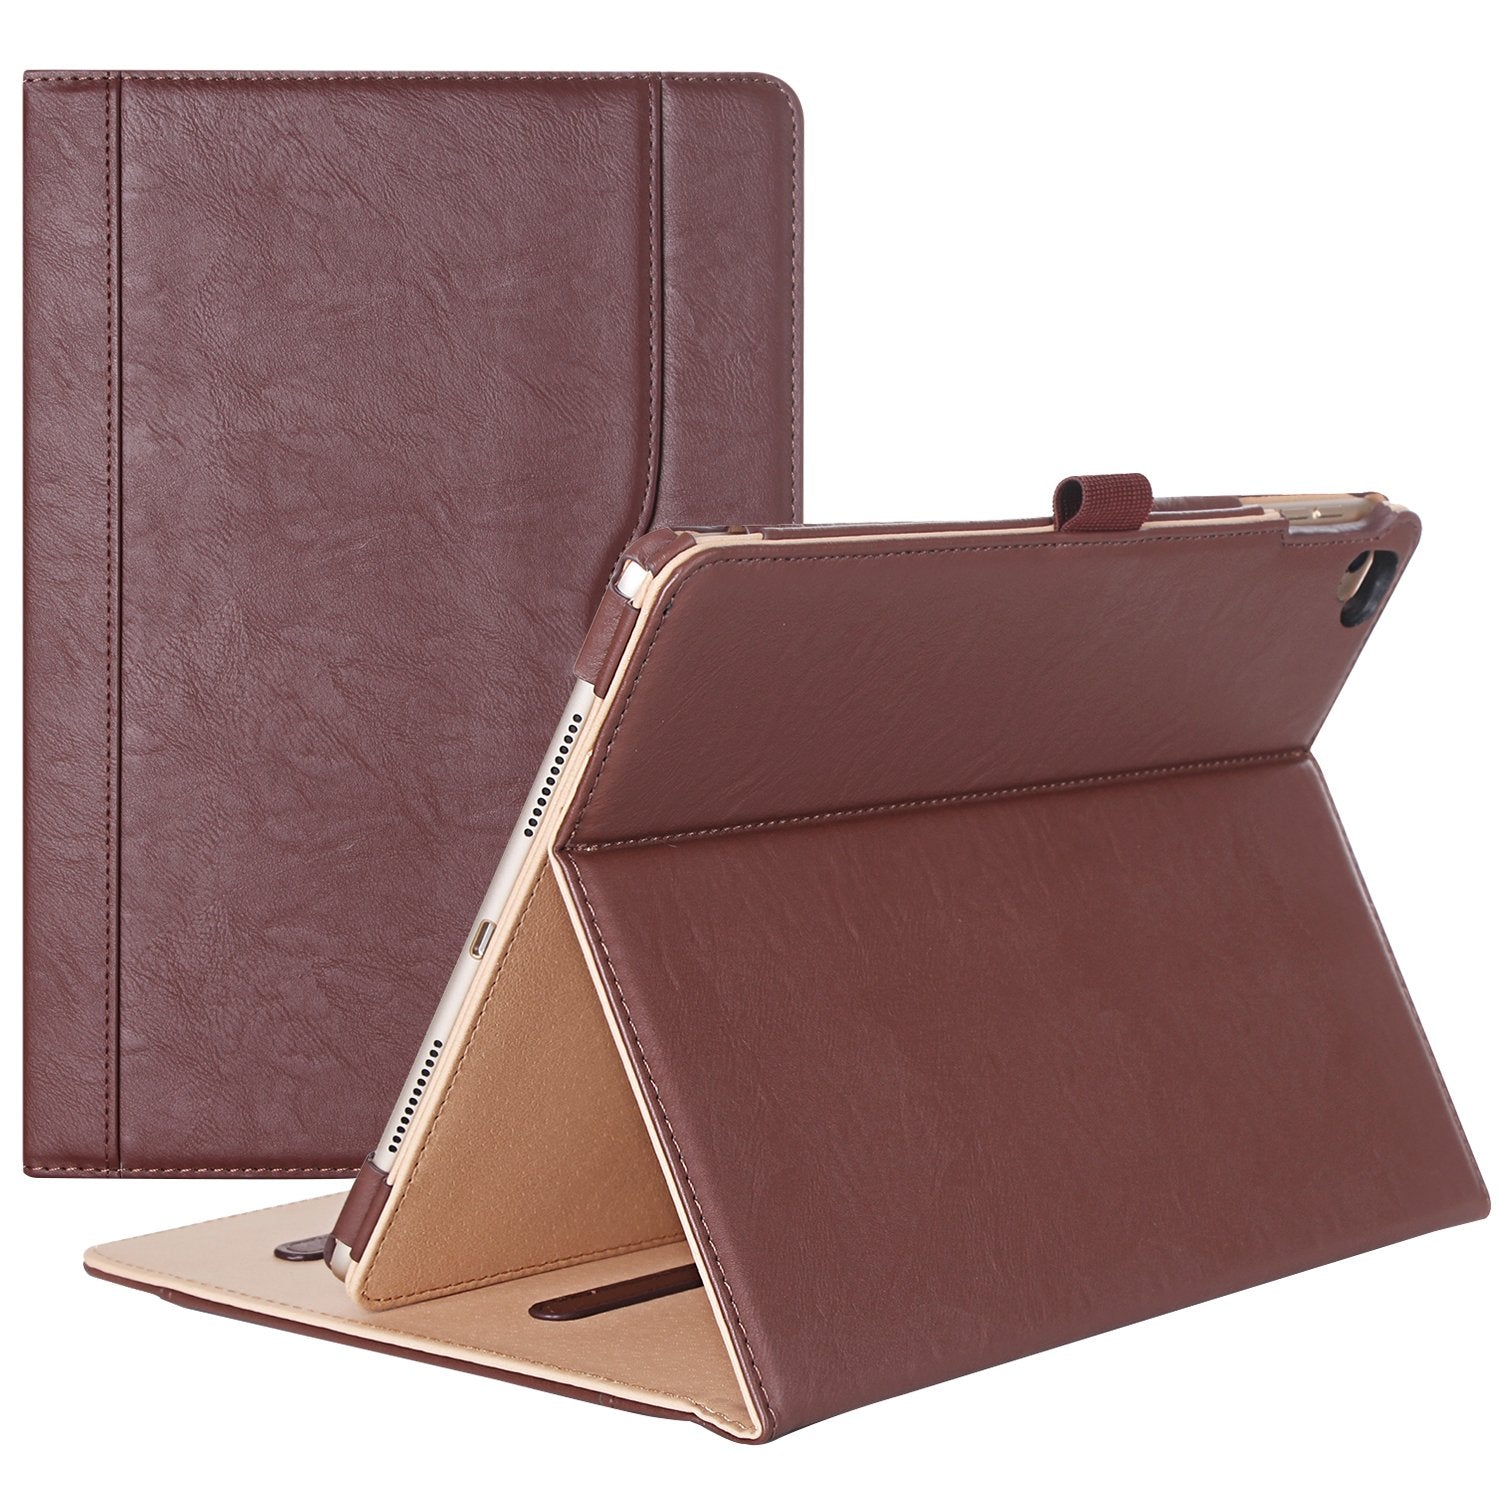 iPad Pro 9.7 2016 Leather Folio Case | ProCase brown